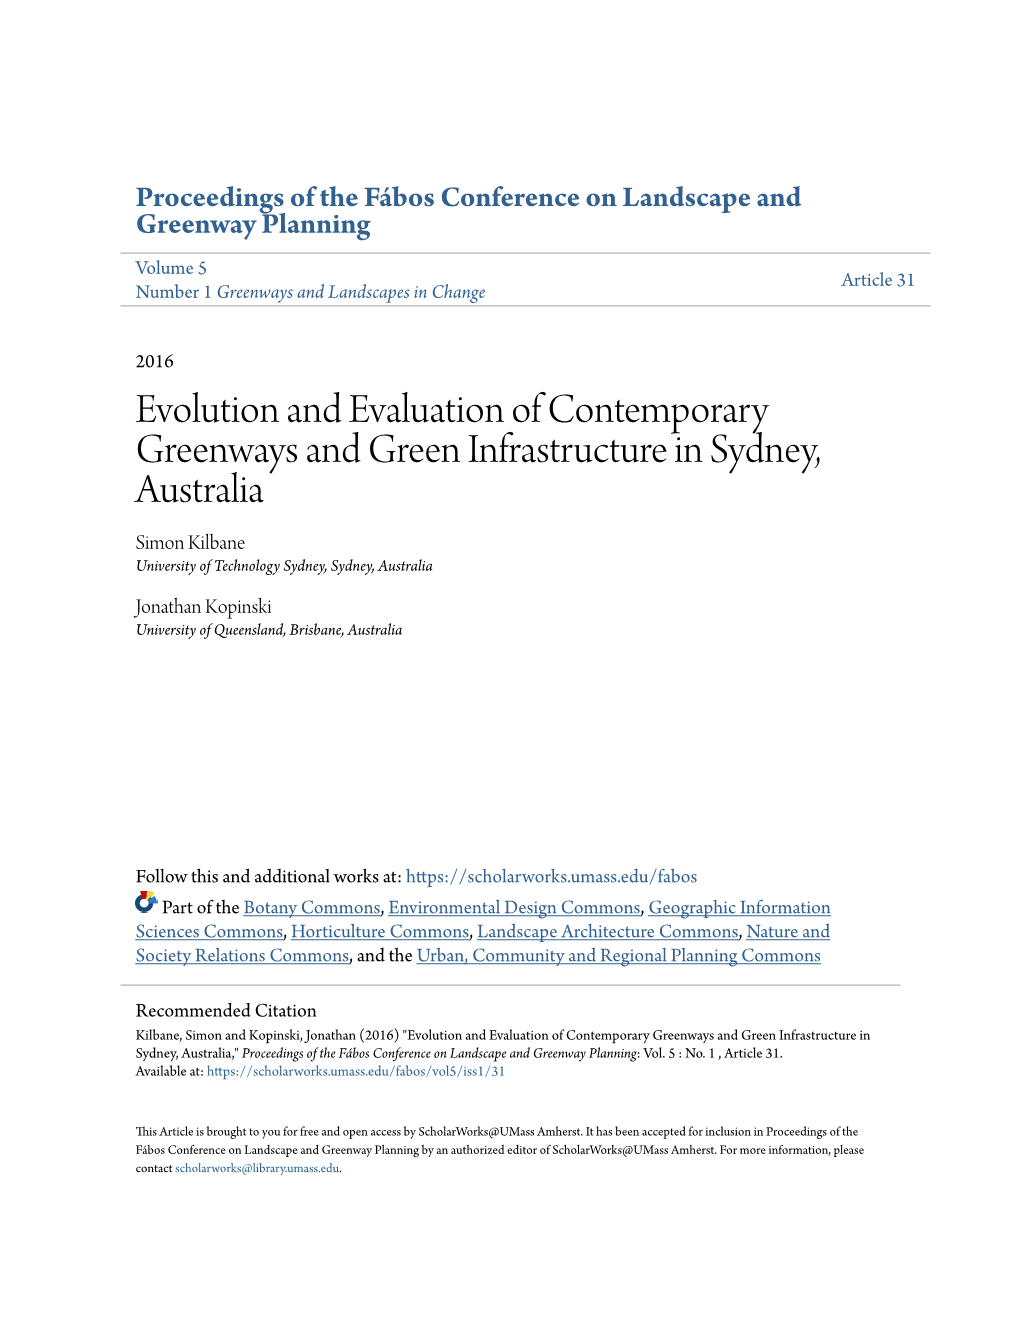 Evolution and Evaluation of Contemporary Greenways and Green Infrastructure in Sydney, Australia Simon Kilbane University of Technology Sydney, Sydney, Australia